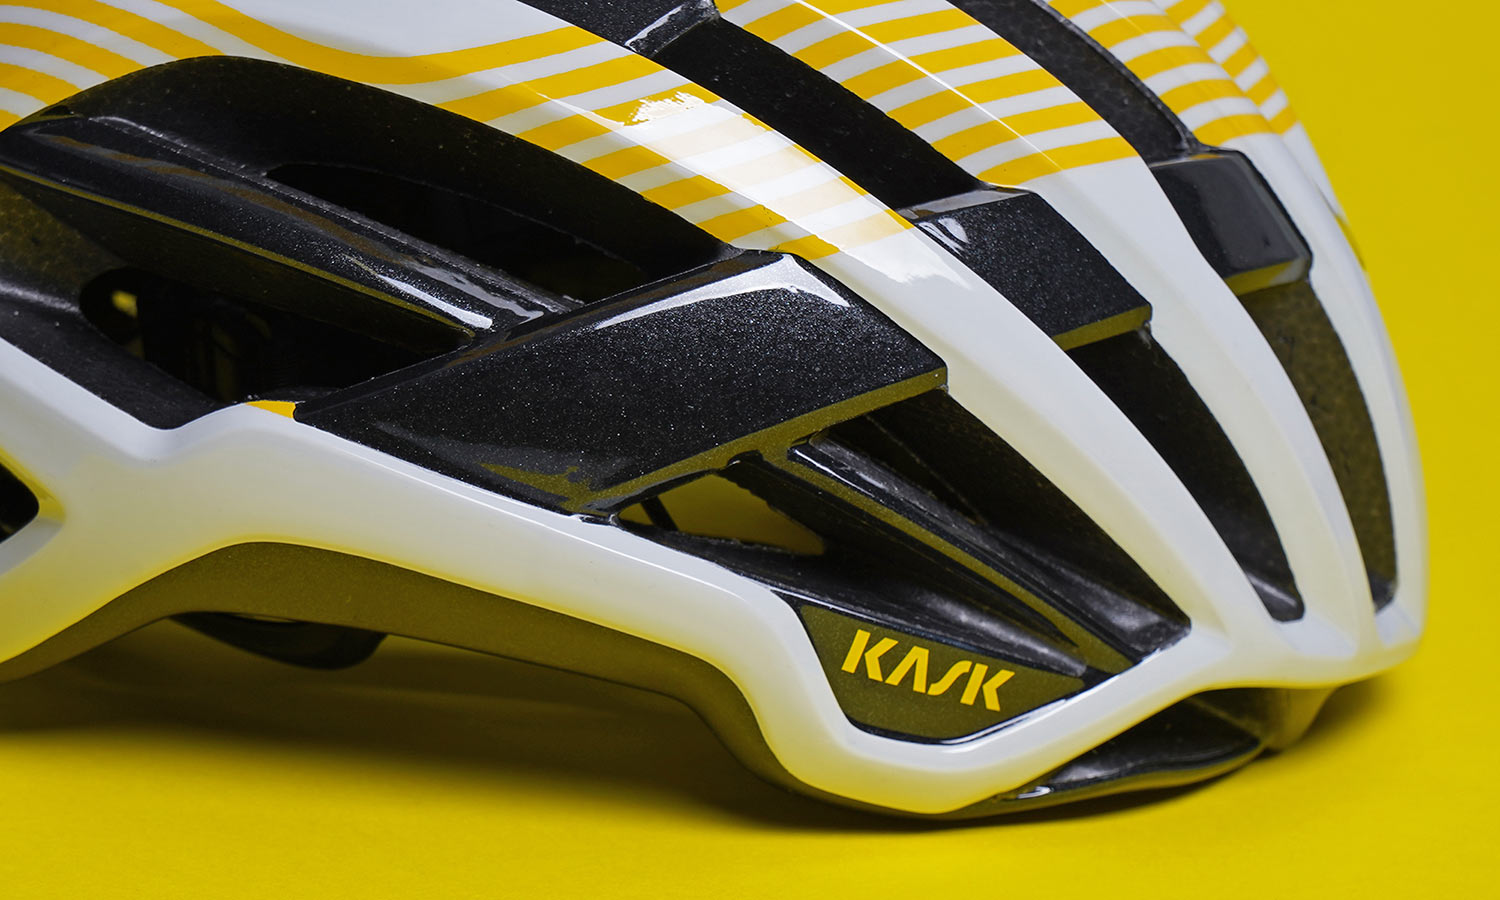 Kask Valegro Tour de France limited edition lightweight vented road bike helmet, detail